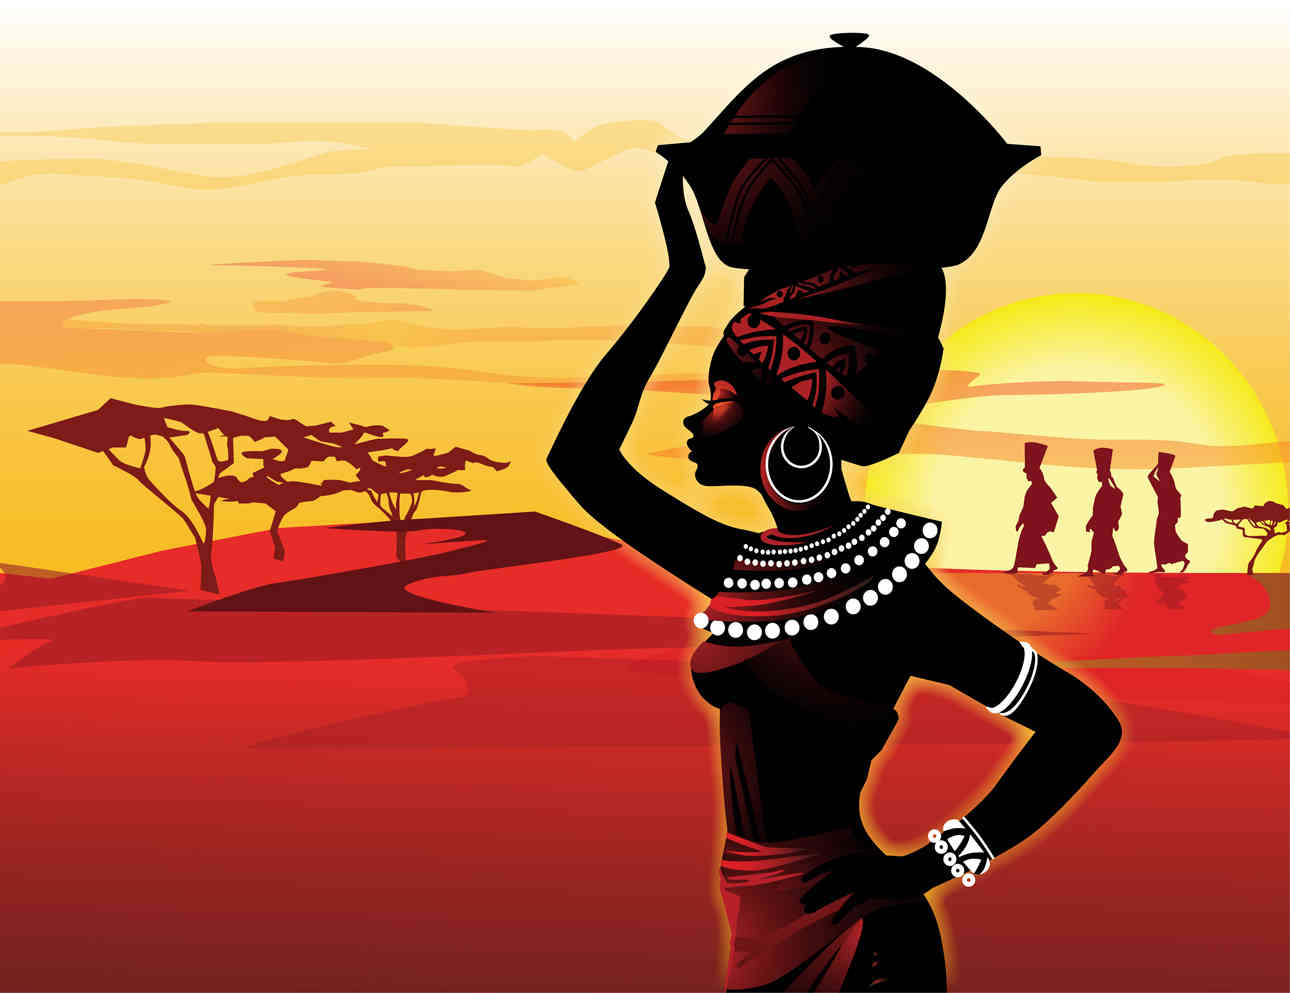 Black Queen Powerful Chess African American Women Digital Art by